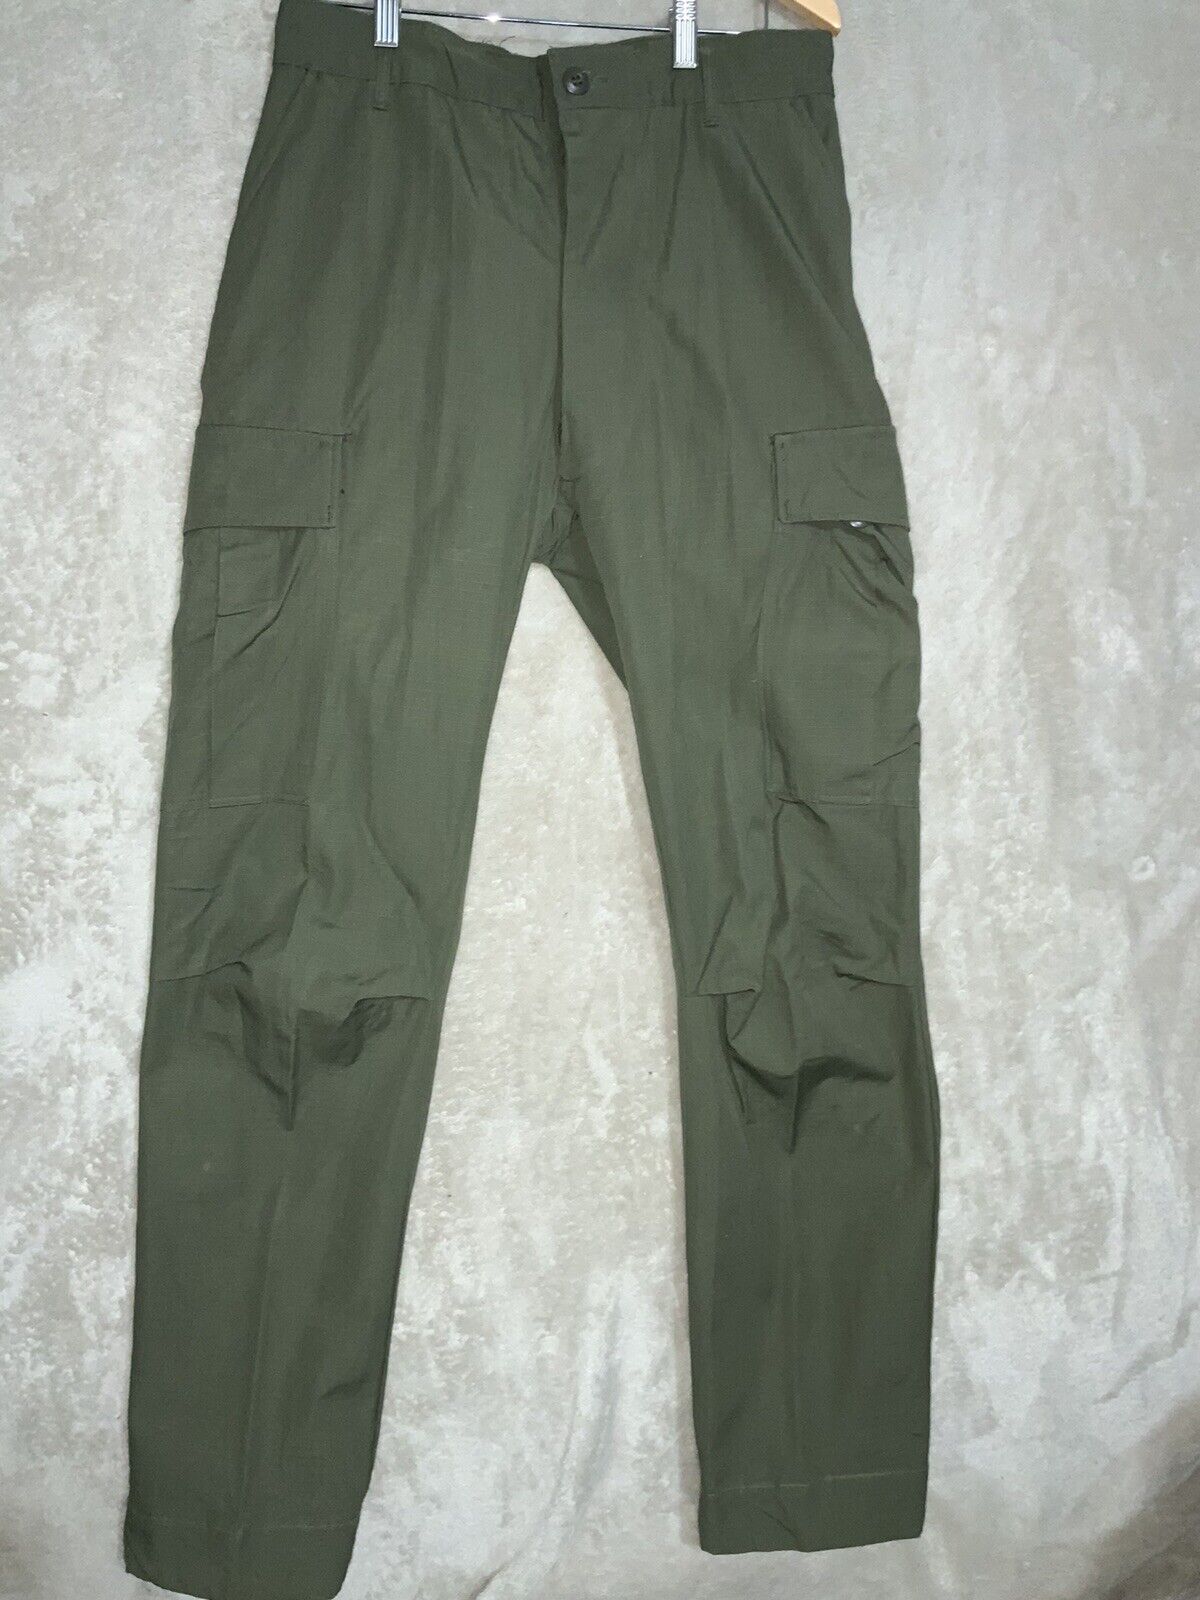 VINTAGE 70s Vietnam US Army Cold Weather Field Trousers Pants Men\'s OG 107 30x32